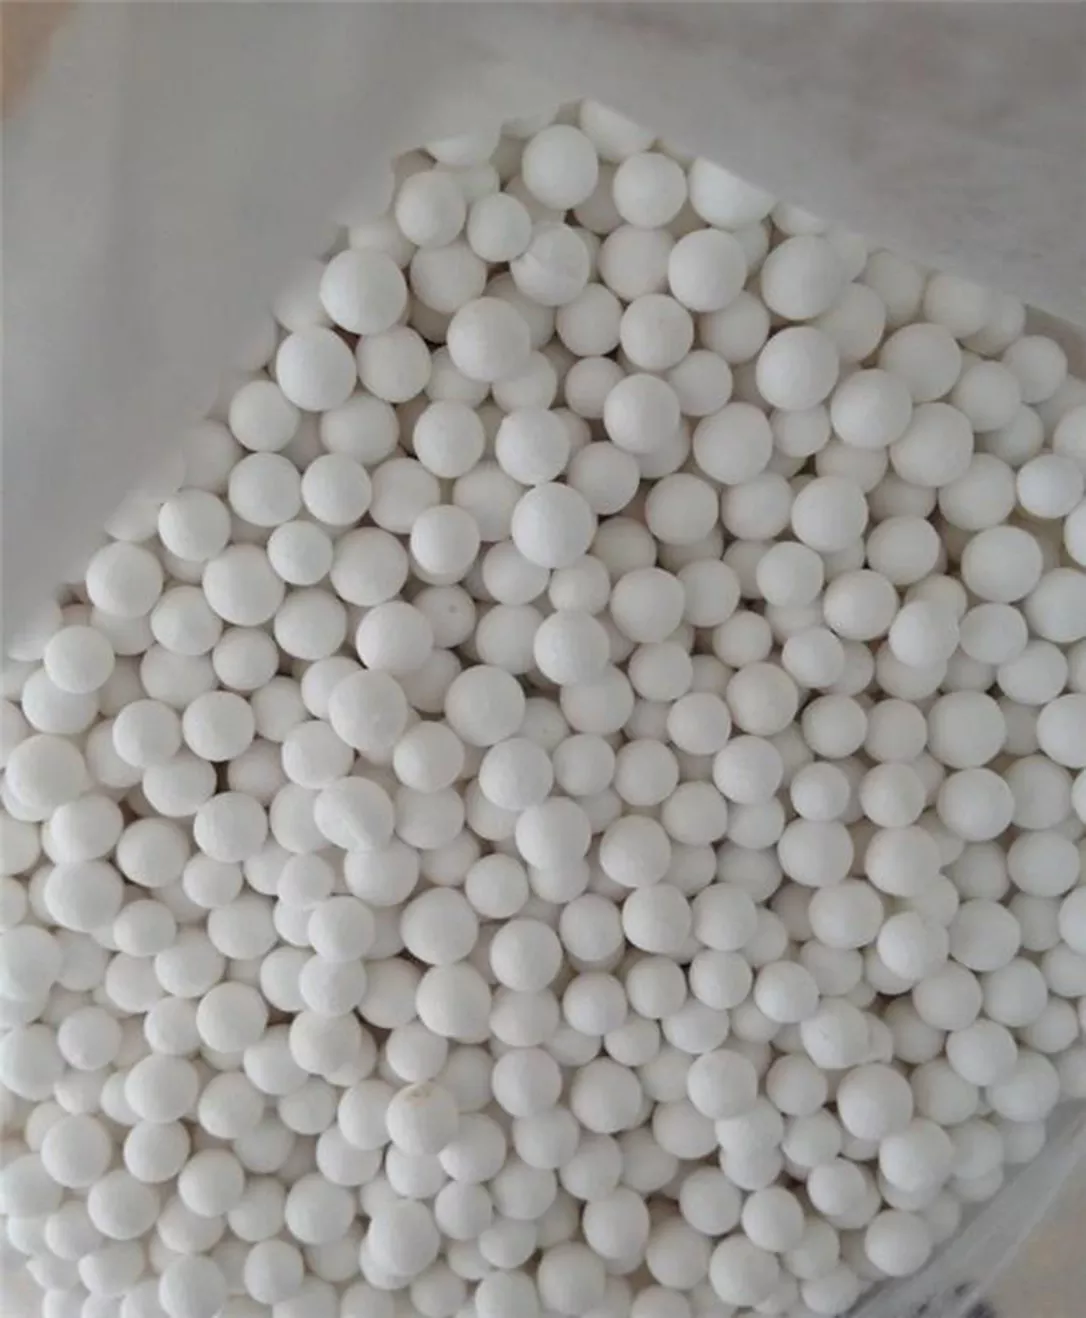 How do ceramic alumina balls perform in high-temperature environments?